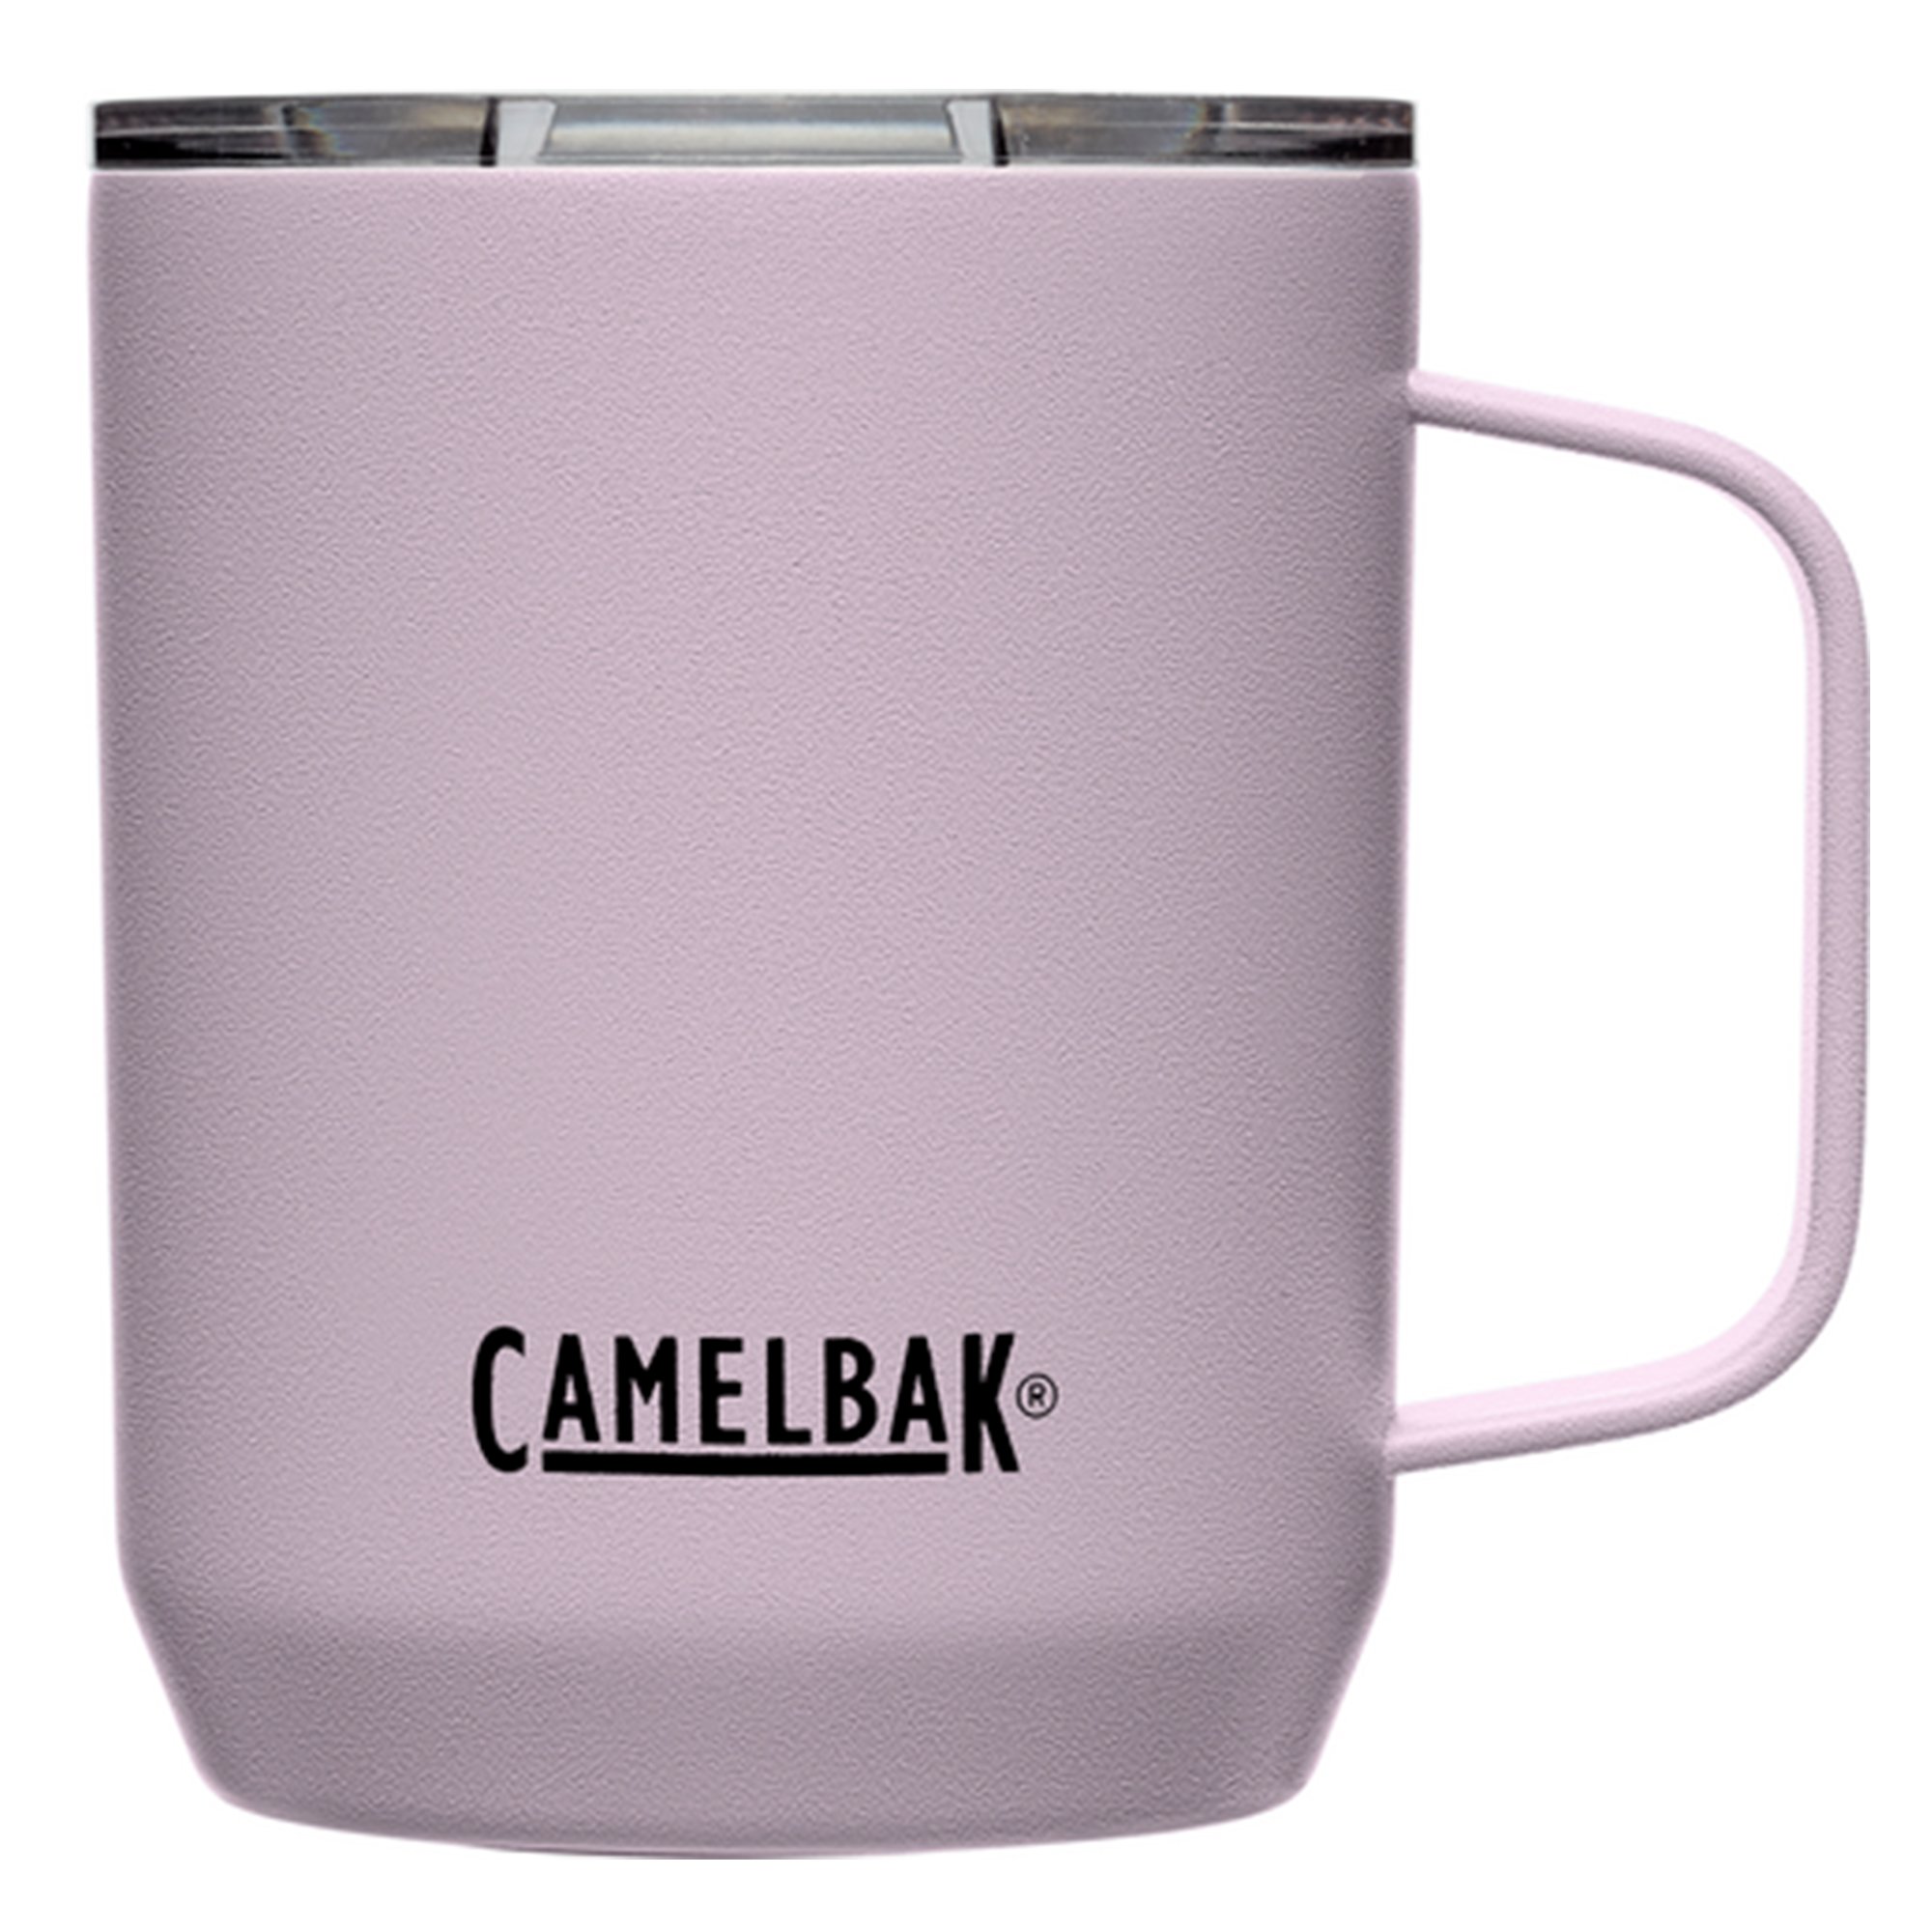 Camelbak Termosmugg 0,35 liter purple sky